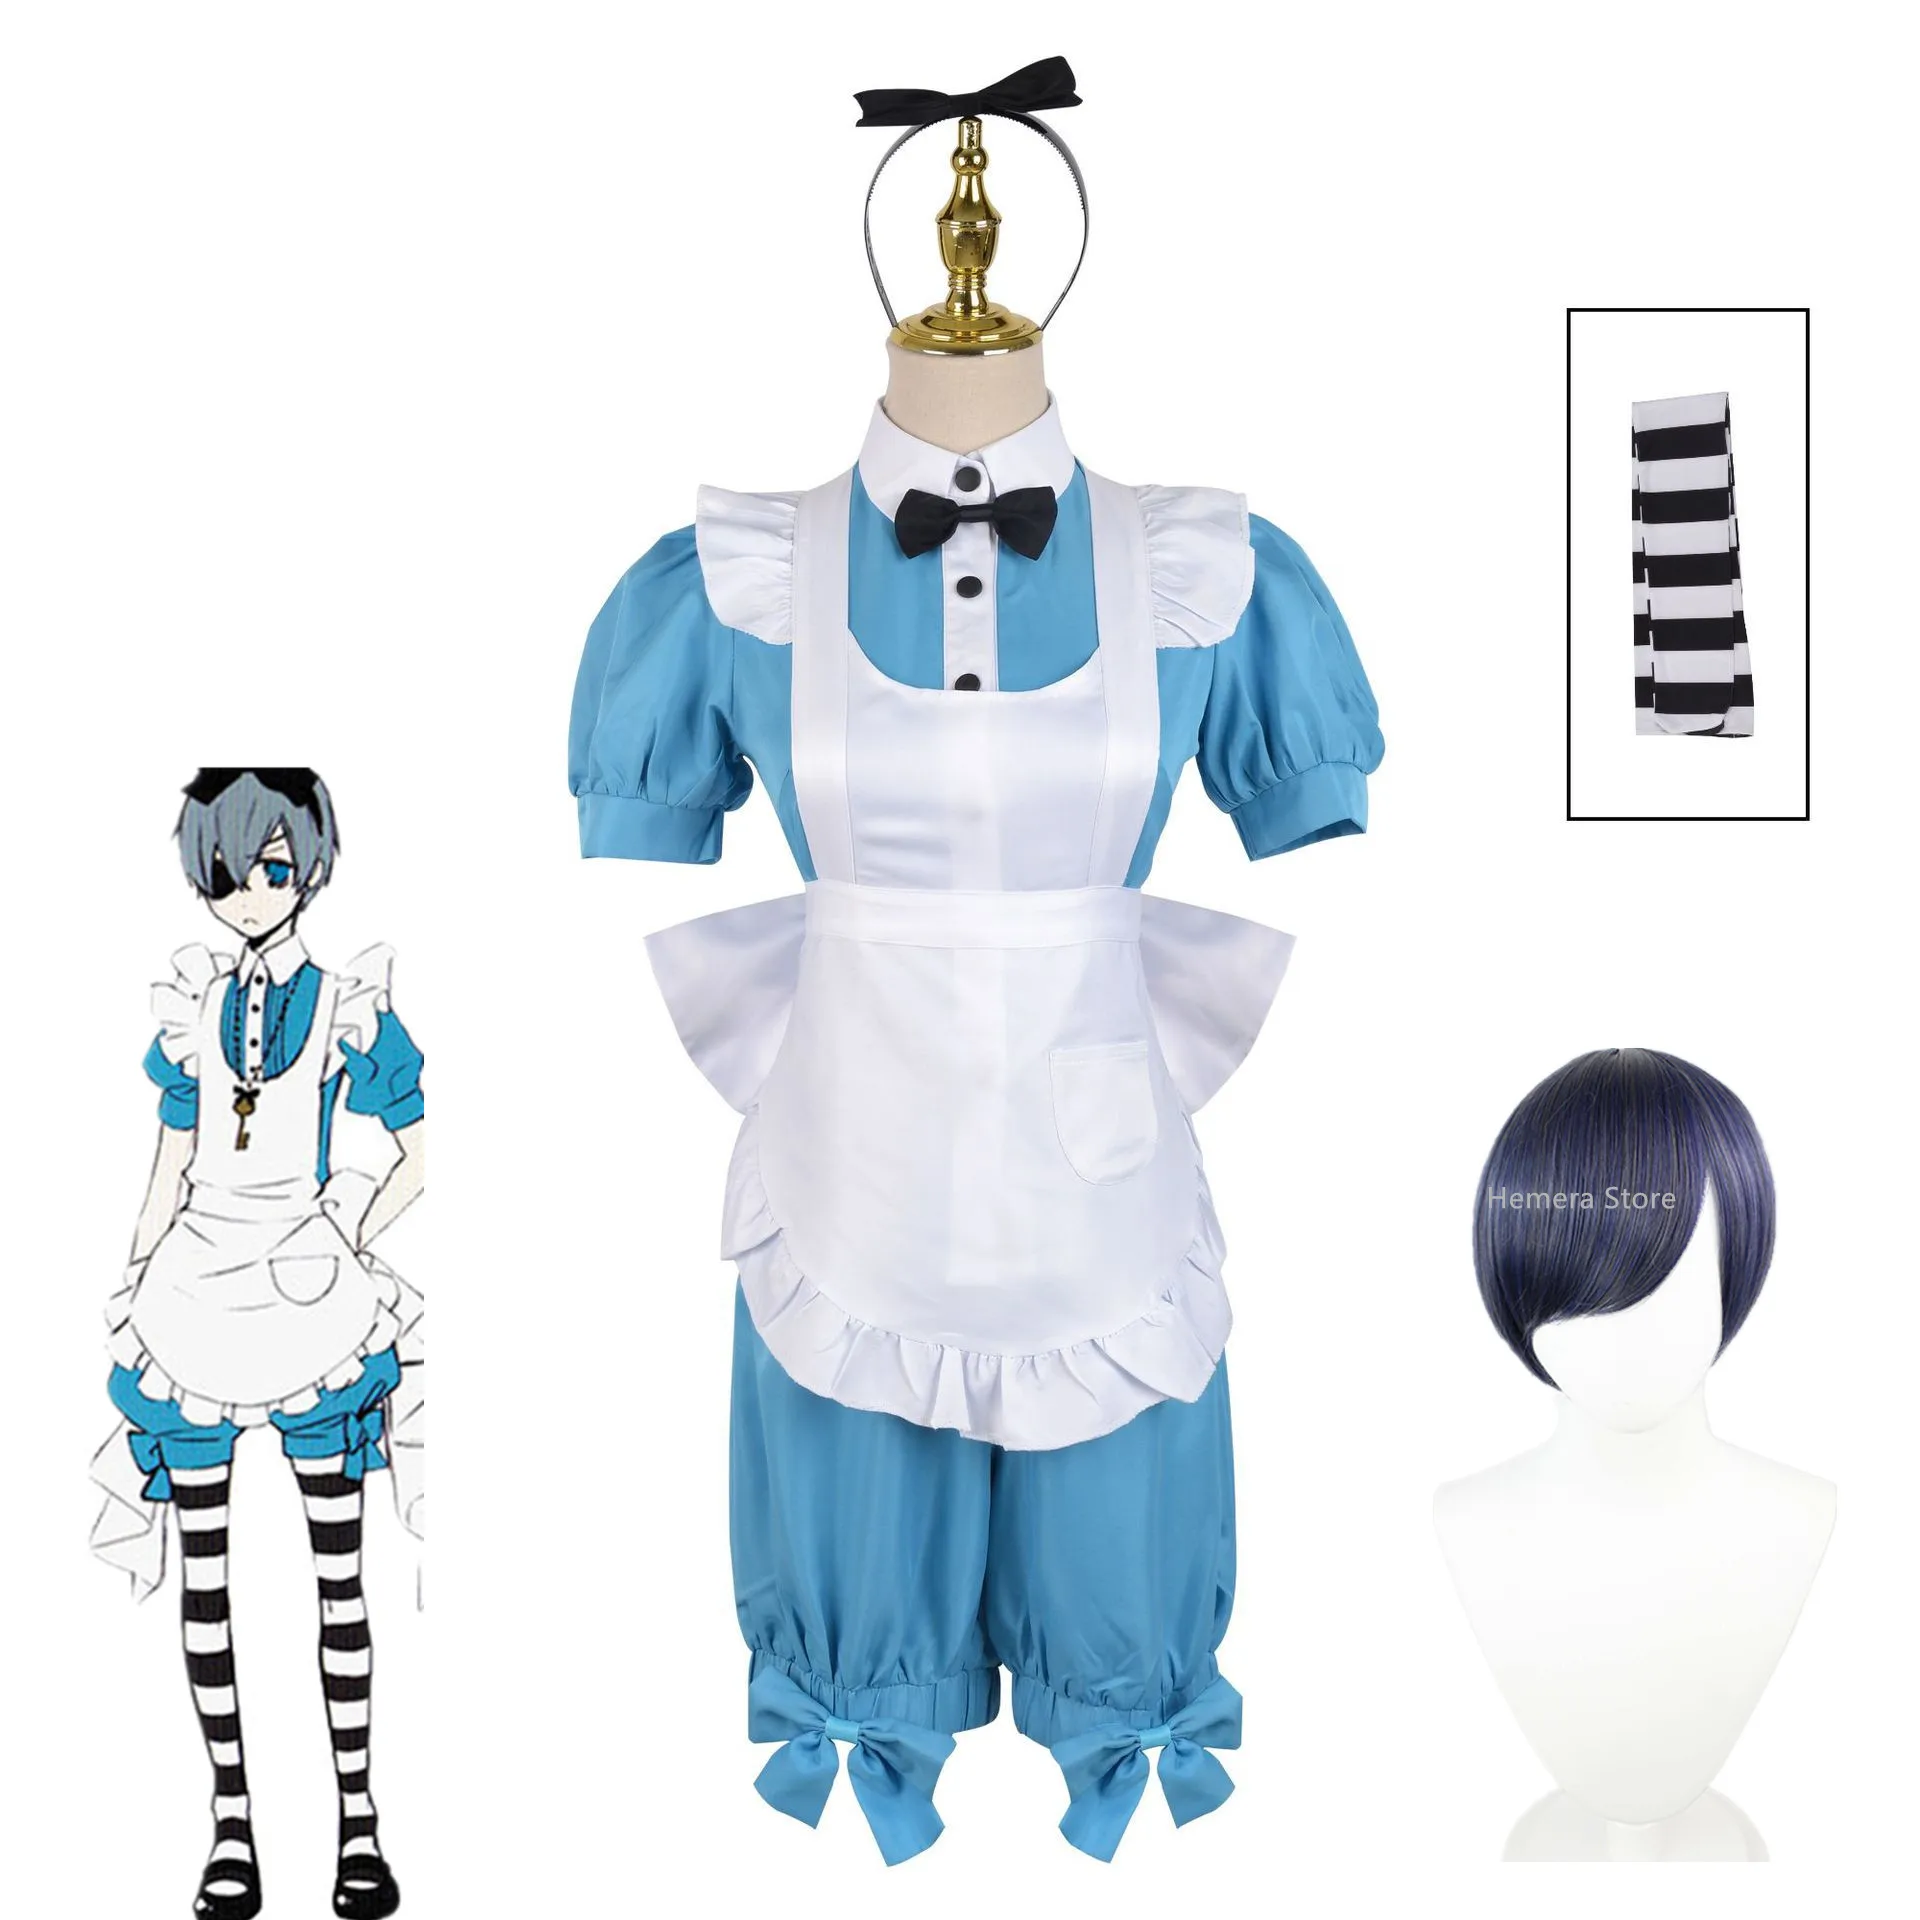 

Anime Cosplay Costumes Black Butler Alice Kuroshitsuji Ciel Phantomhive Maid Apron Dress Uniform Outfit Halloween Costumes Women